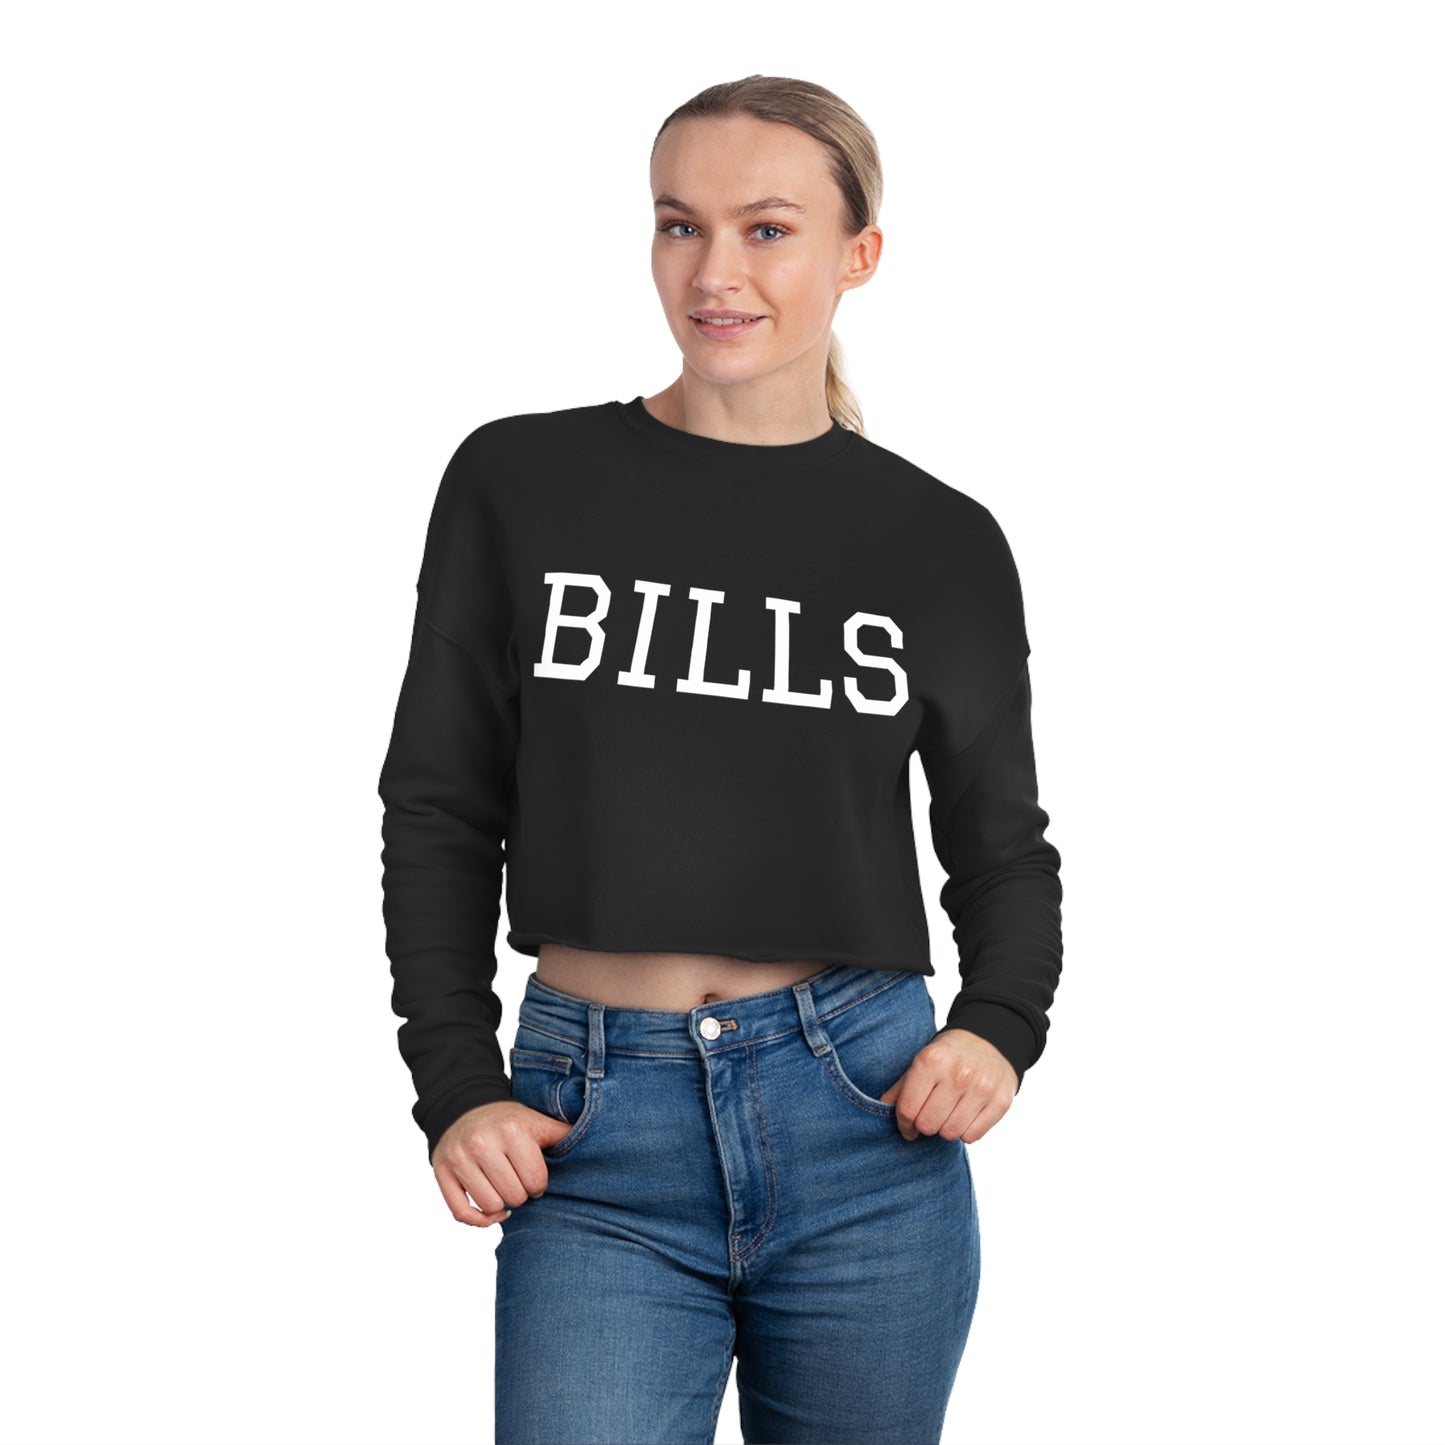 Bills Graduate Women's Cropped Sweatshirt